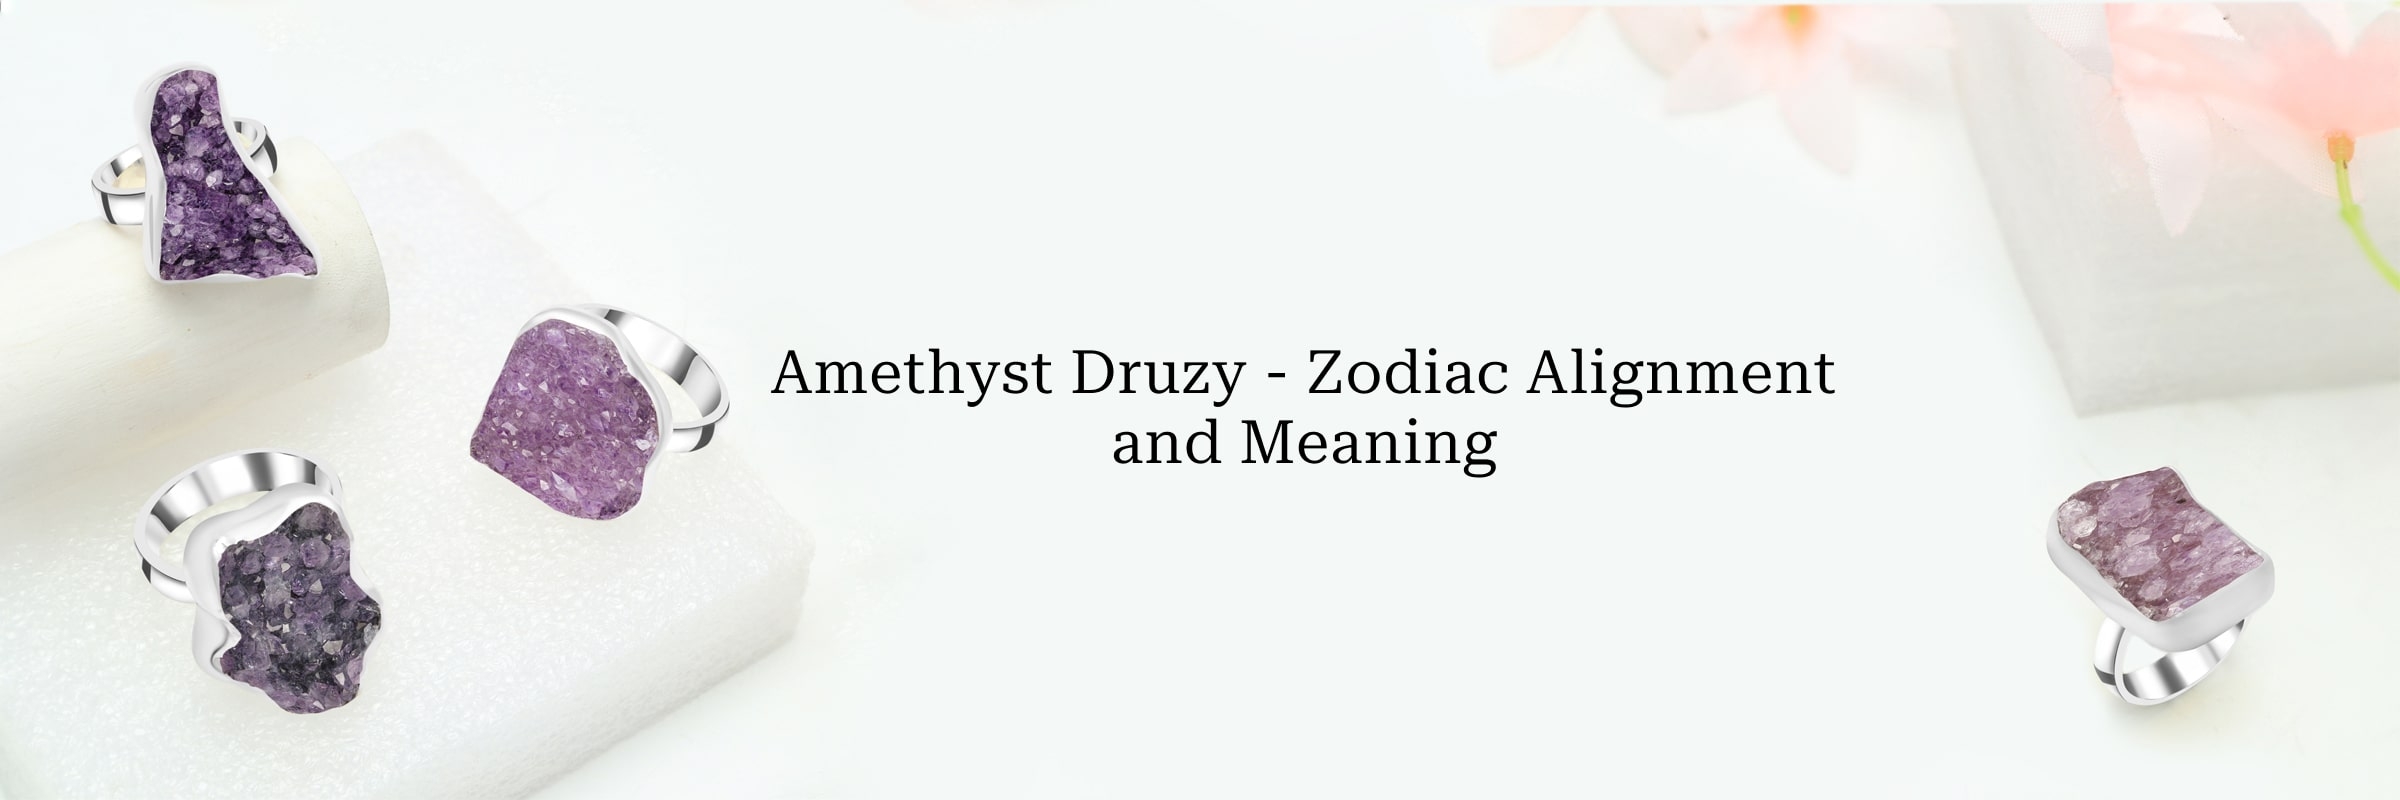 Zodiac Association of Amethyst Druzy Stone